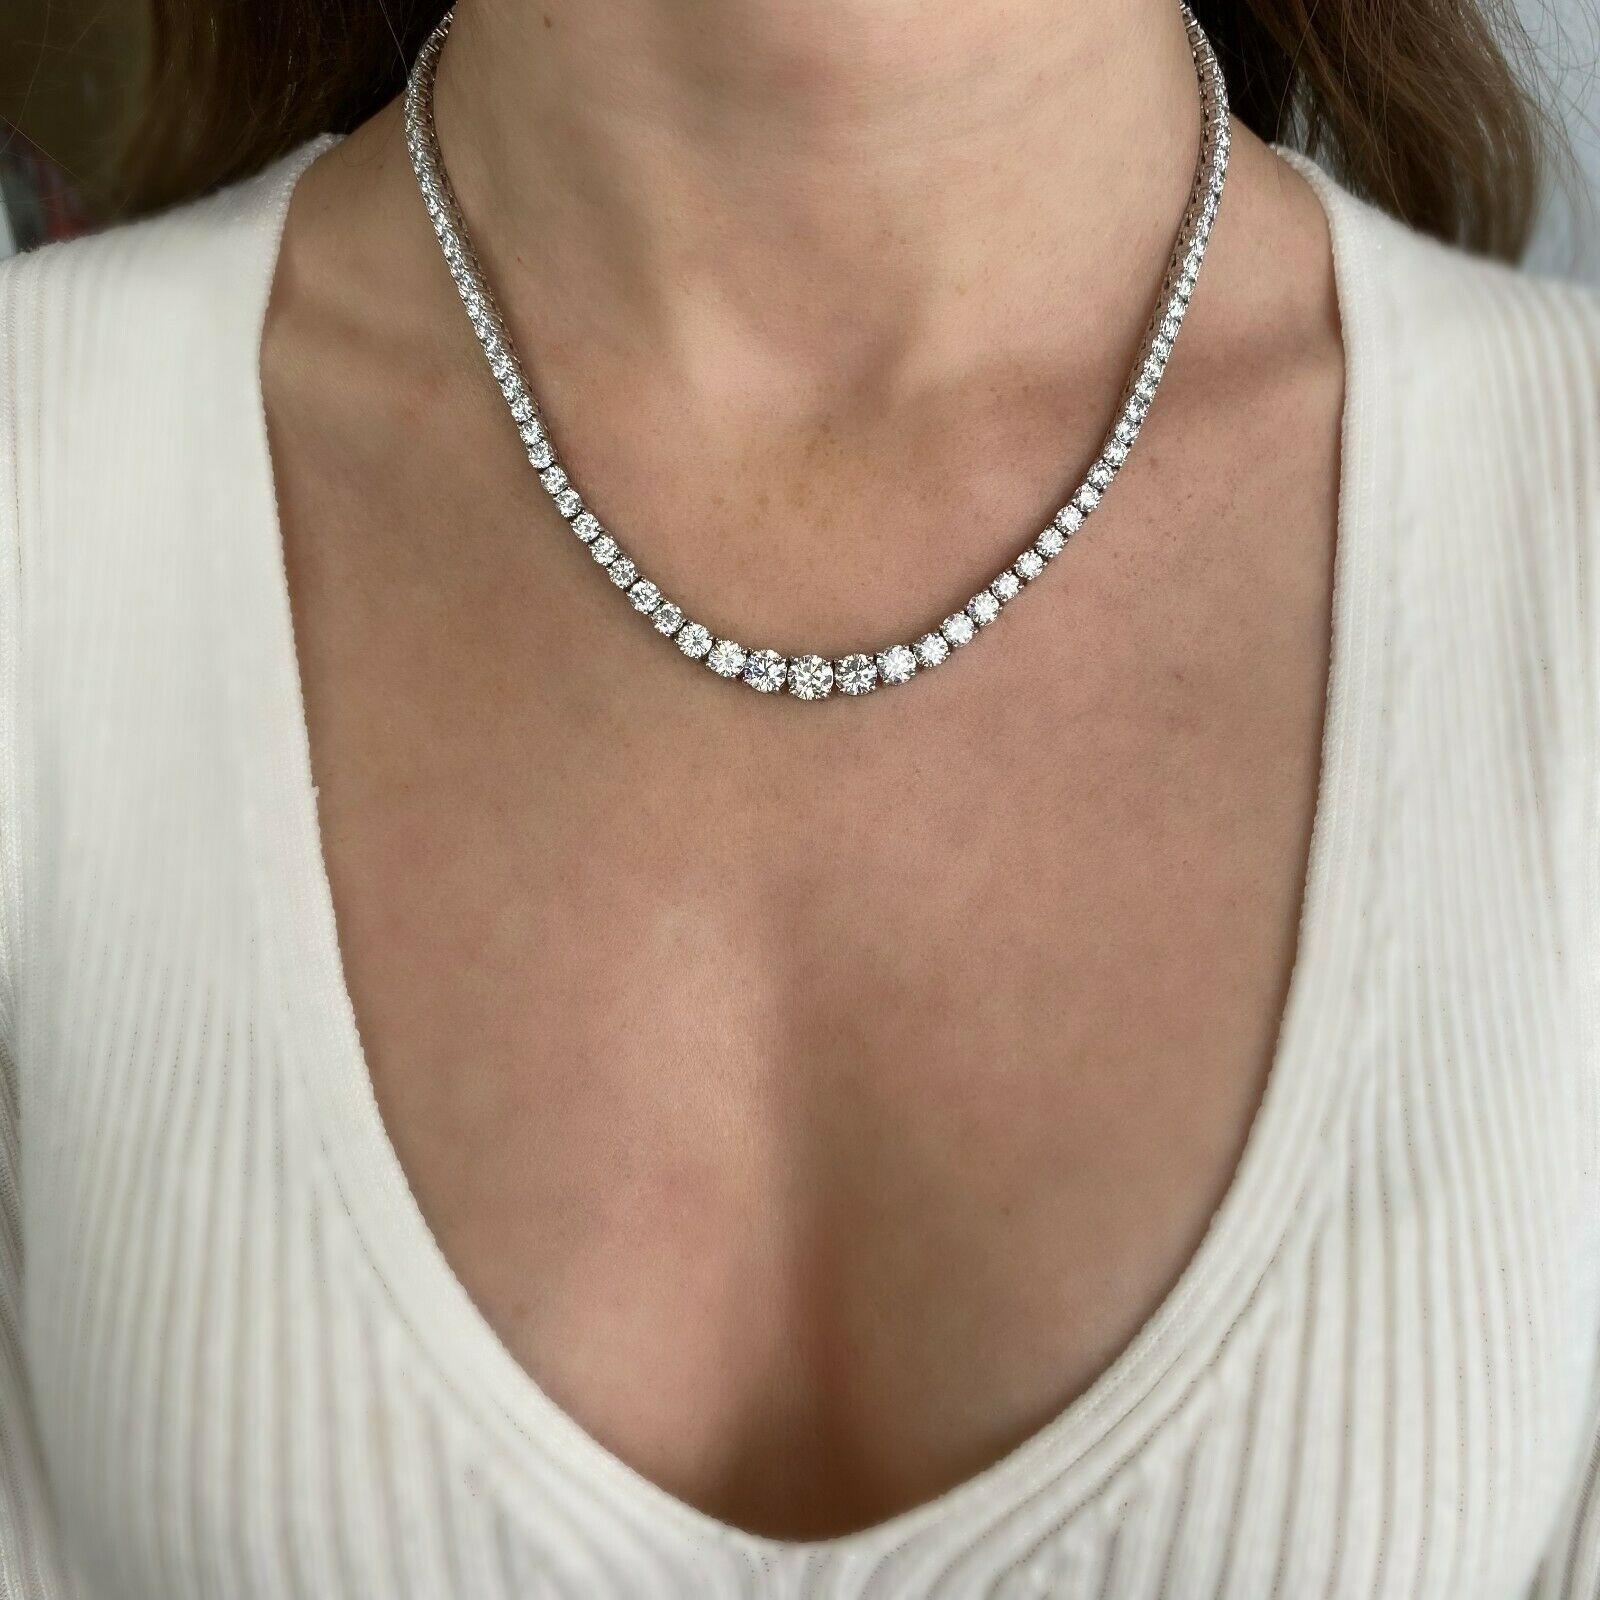 emmanuel rivera diamond necklace